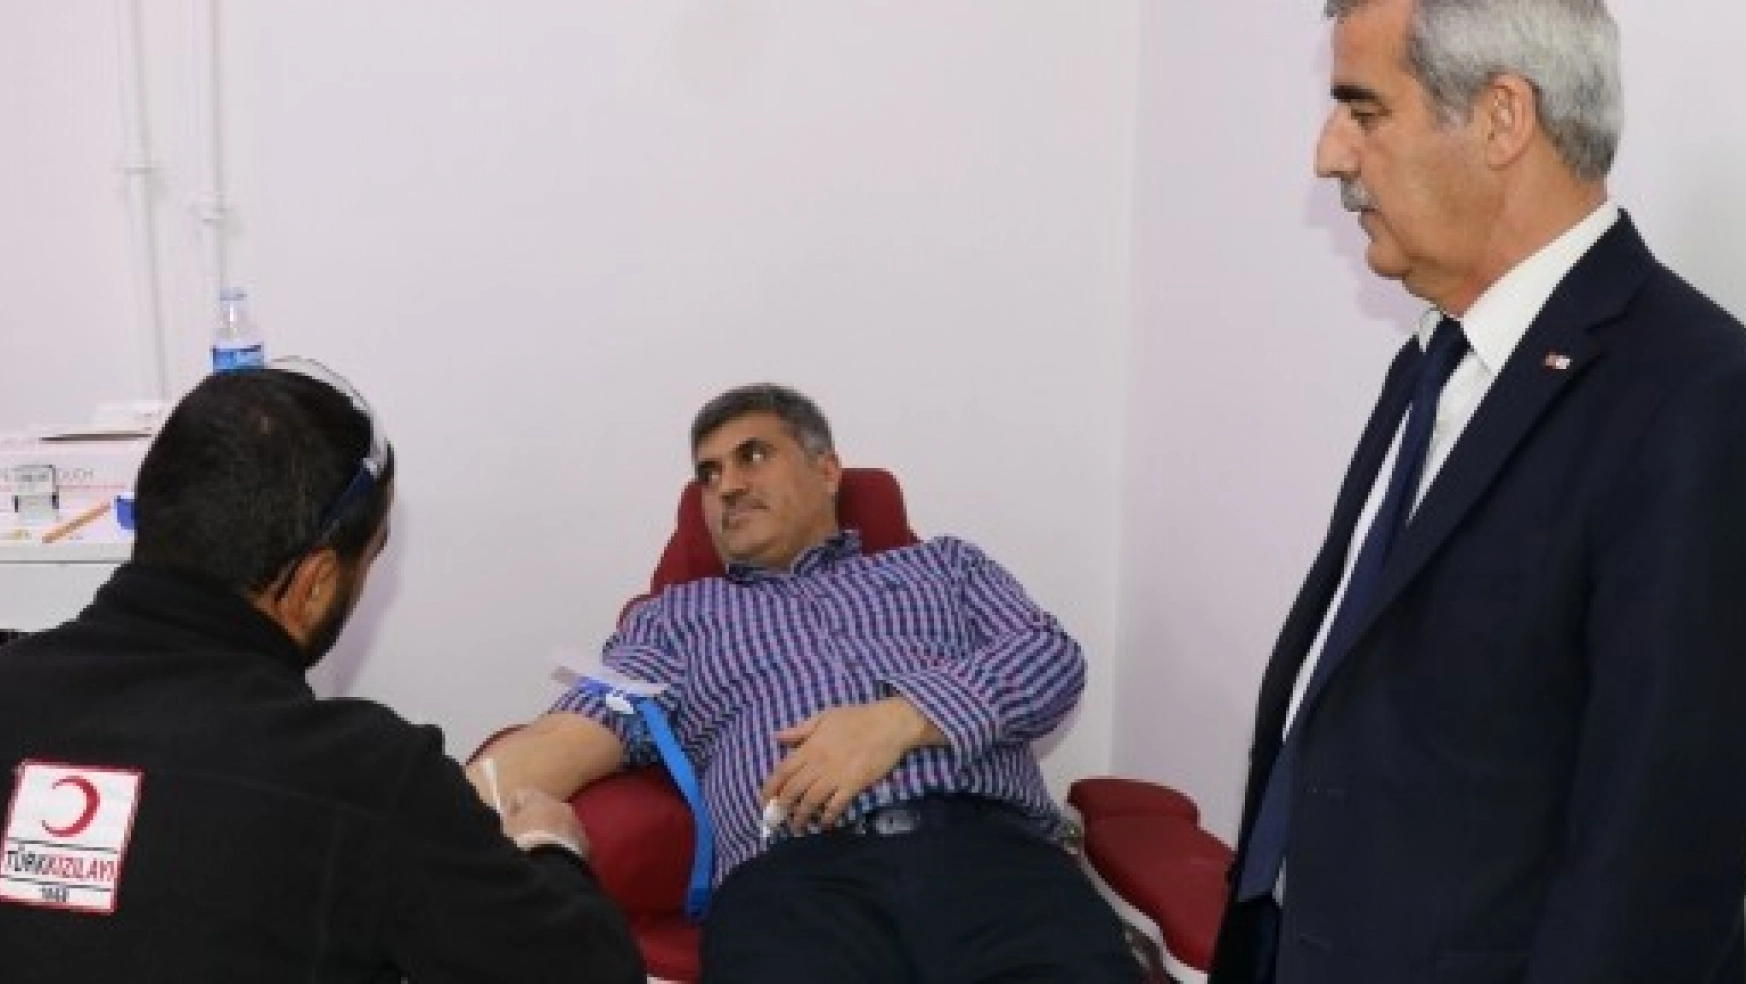 Başsavcısı Muhammet Savran'dan Kan Bağışı